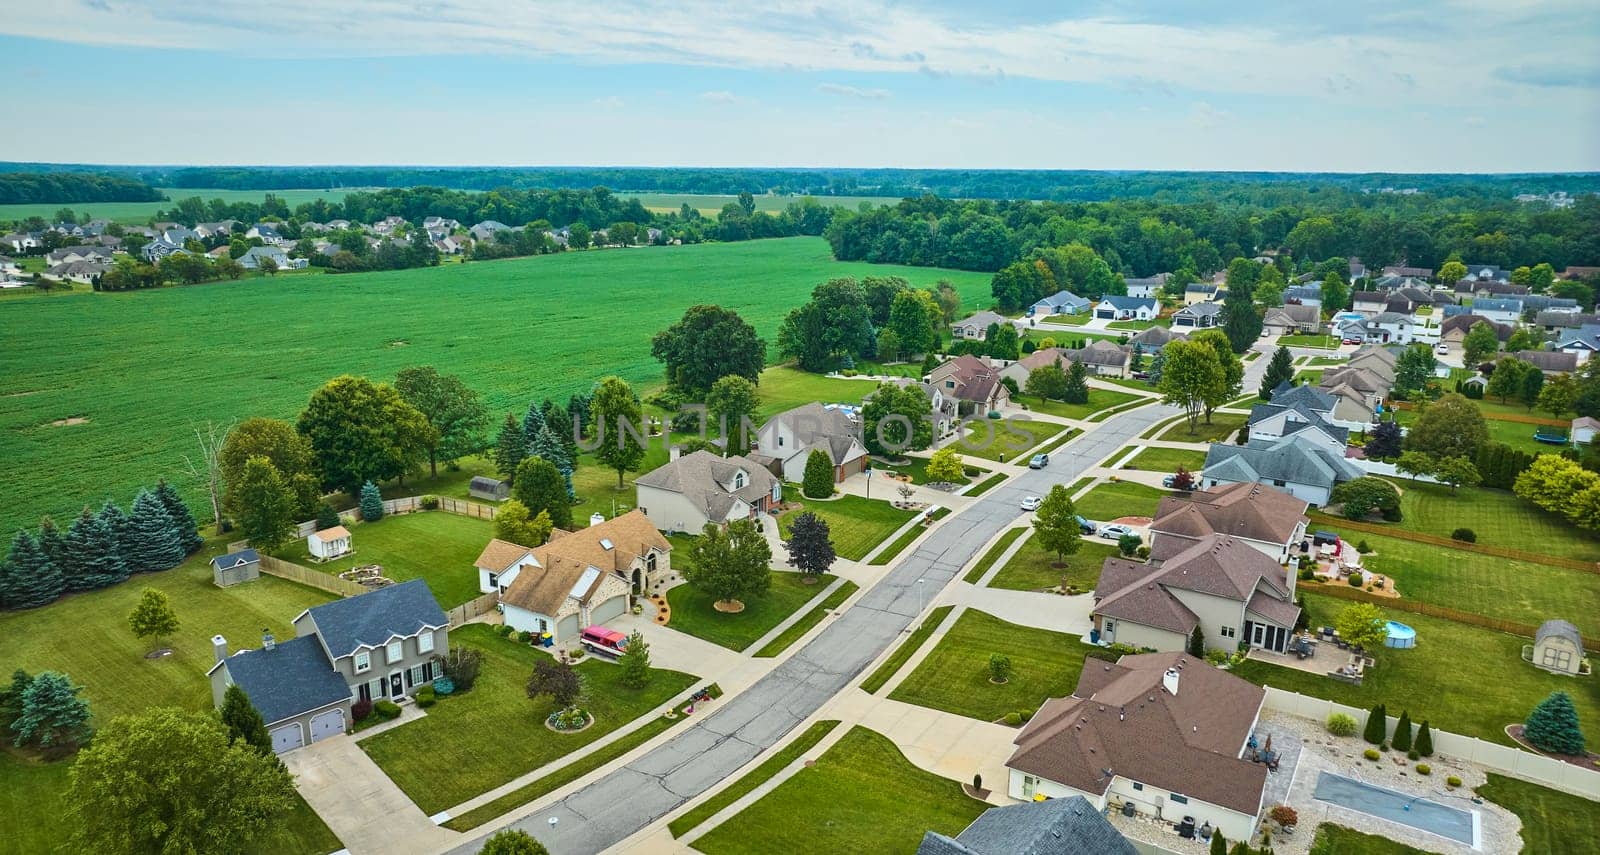 Image of Aerial rural neighborhood with farmland between neighborhoods